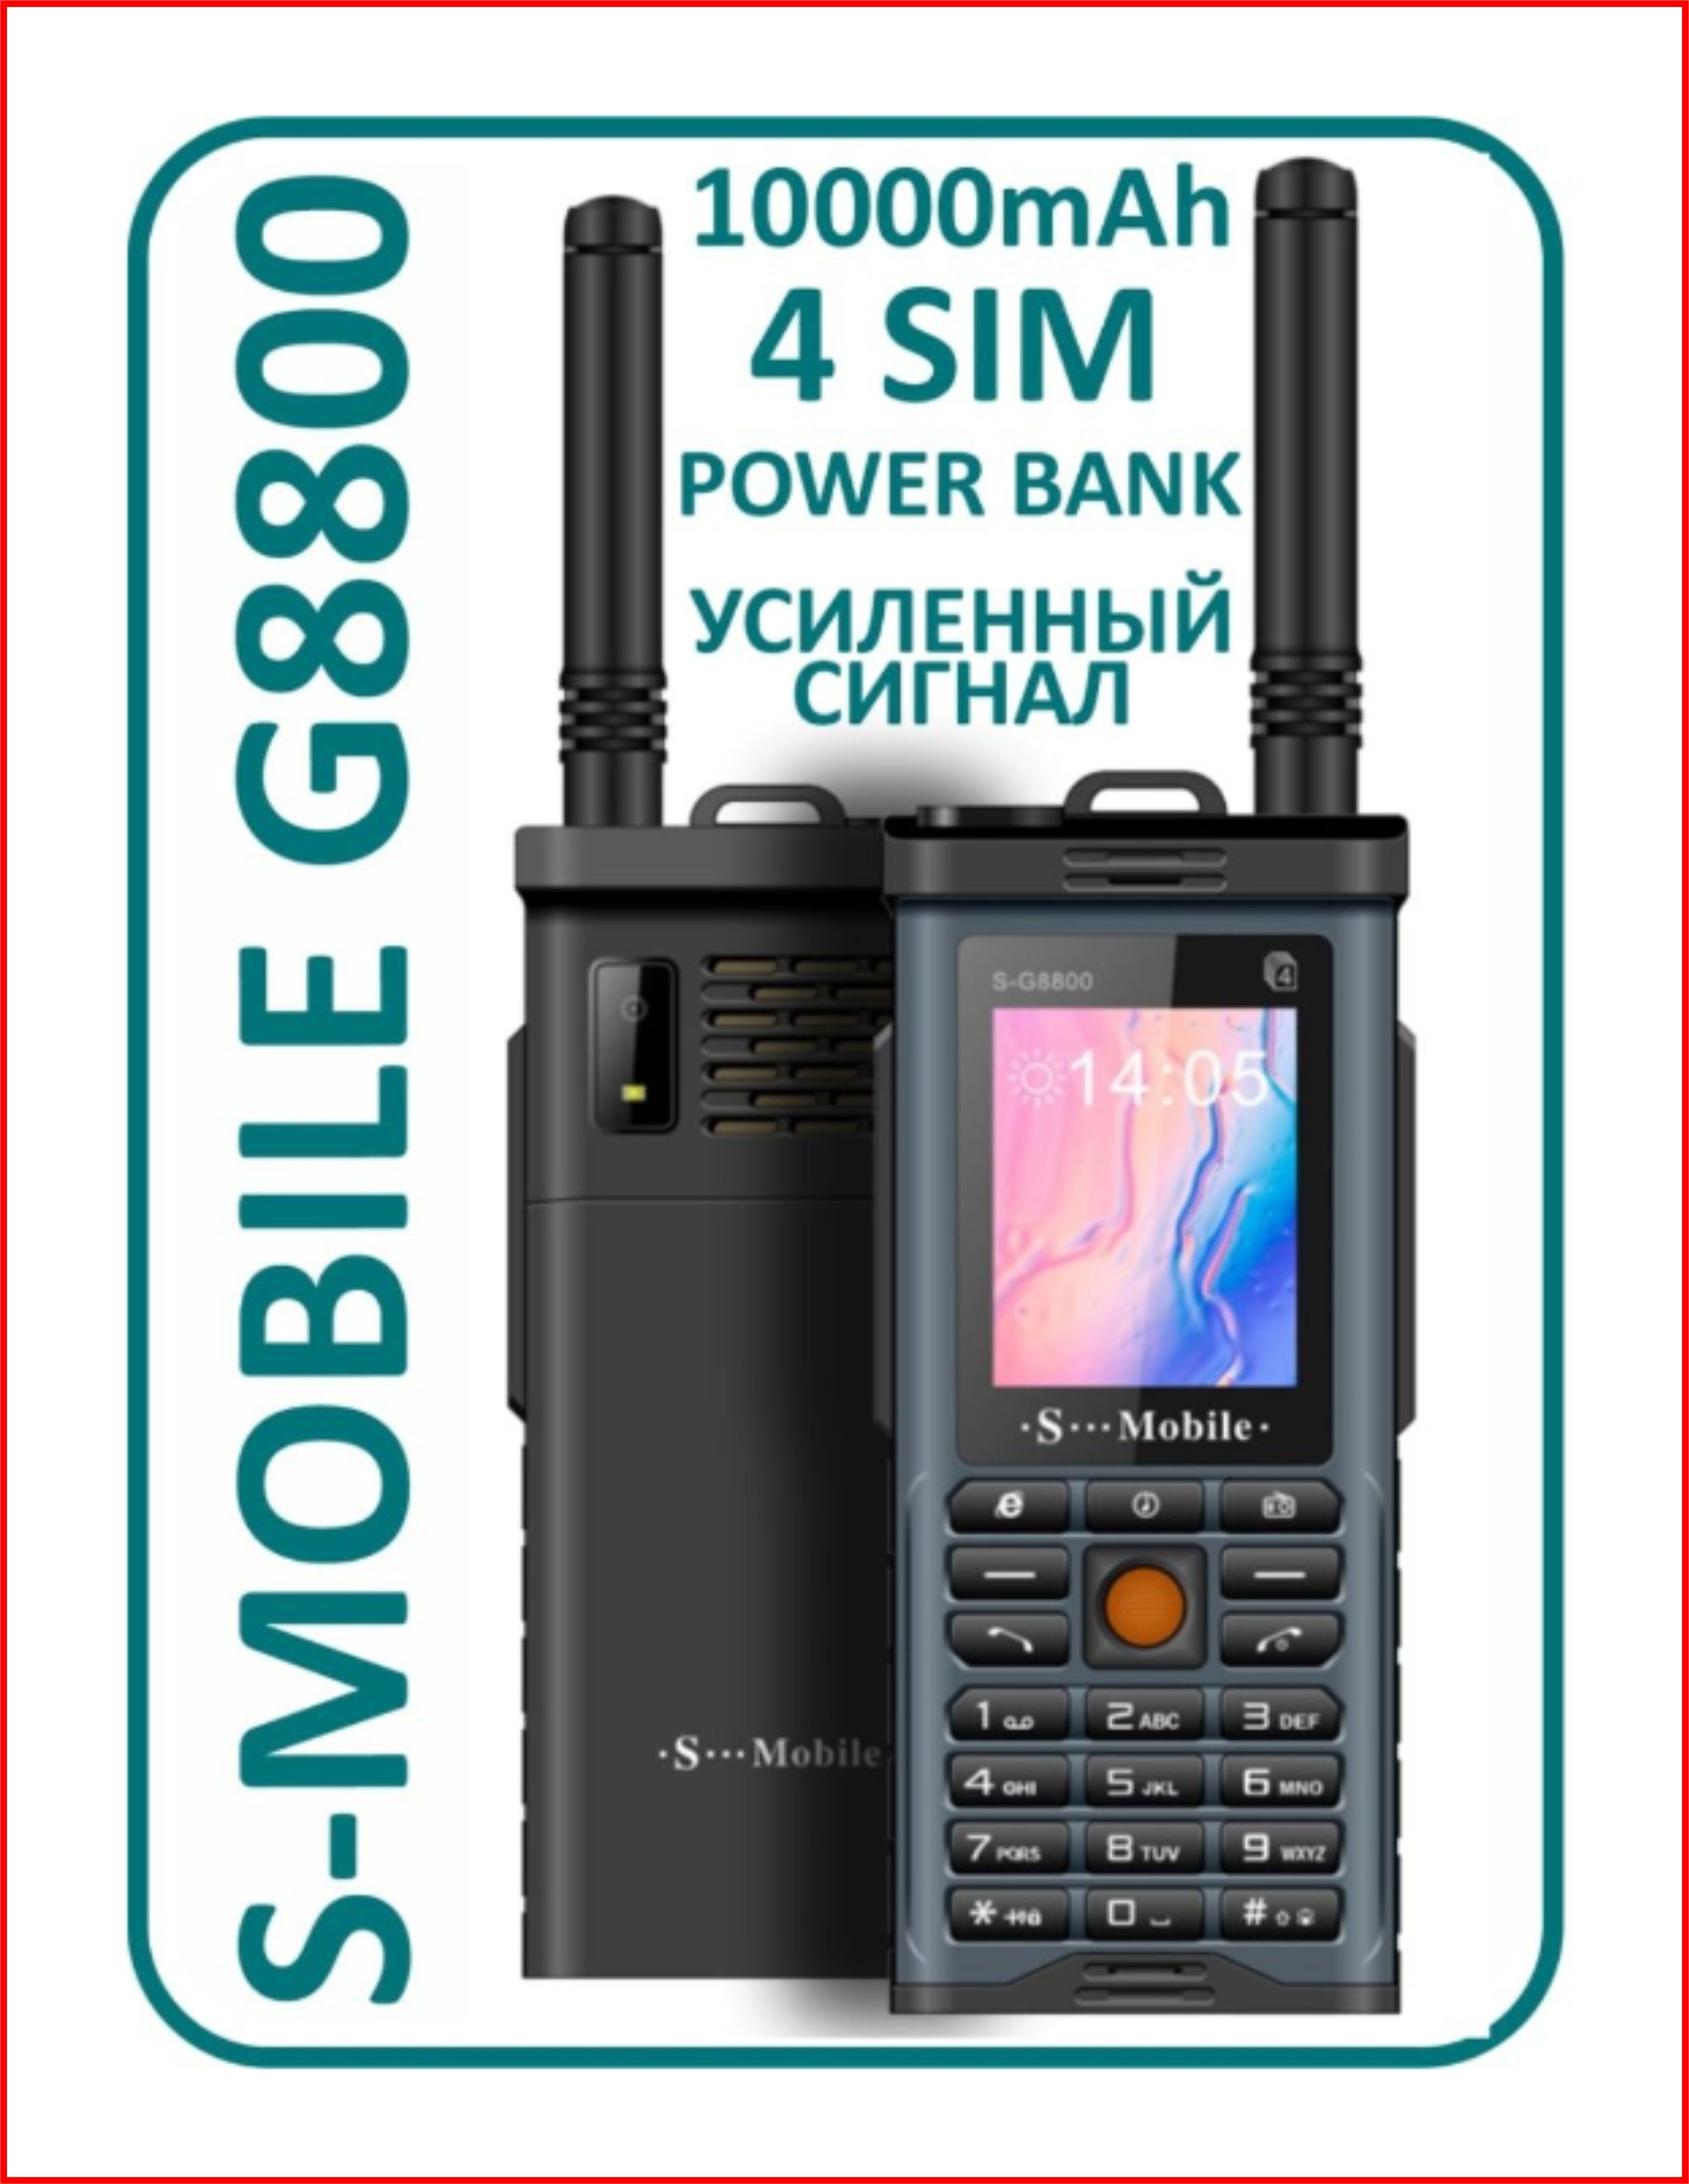 S mobile отзывы. Телефон s-g8800 отзыв.